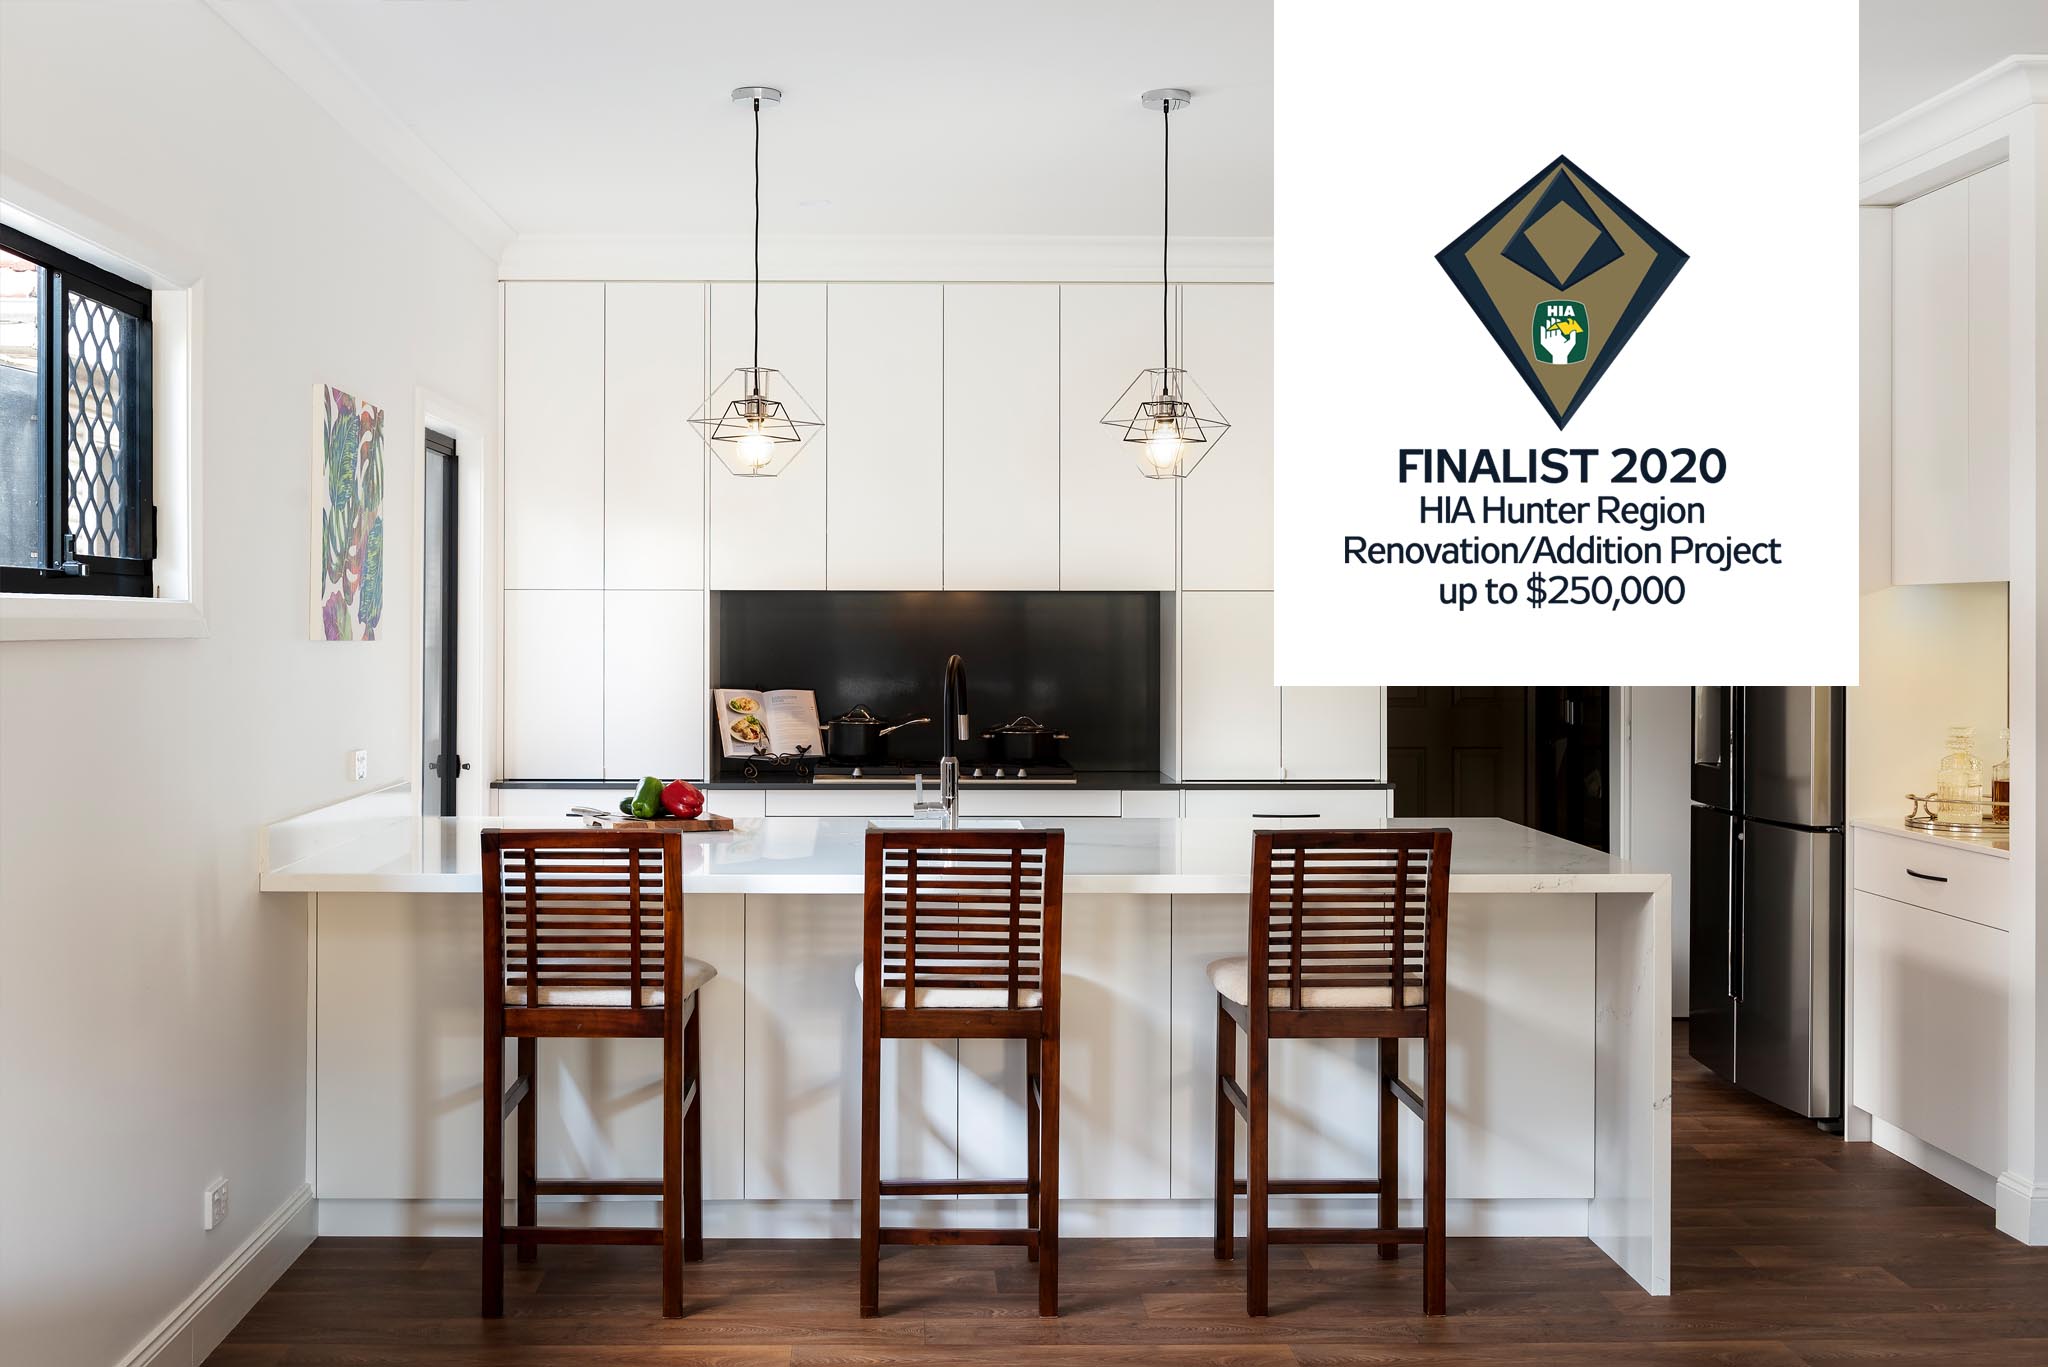 finalist-image-and-logo-2020-renovation-under-250000